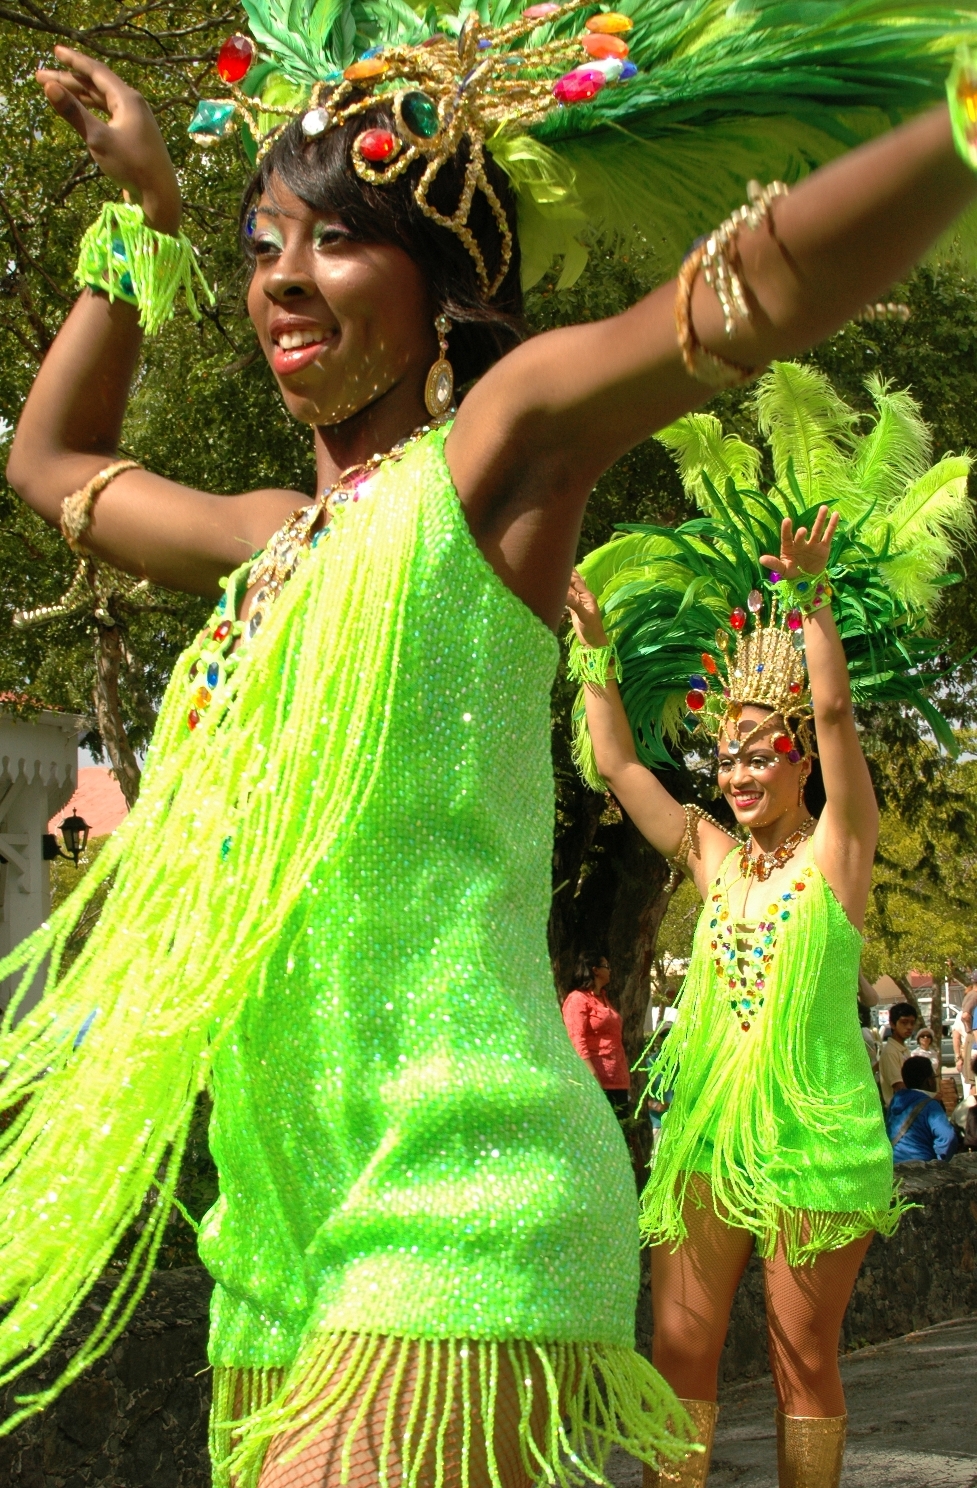 Caribbean Ritual Dancers thrilled the crowd. (Photo © Karen Hollish)